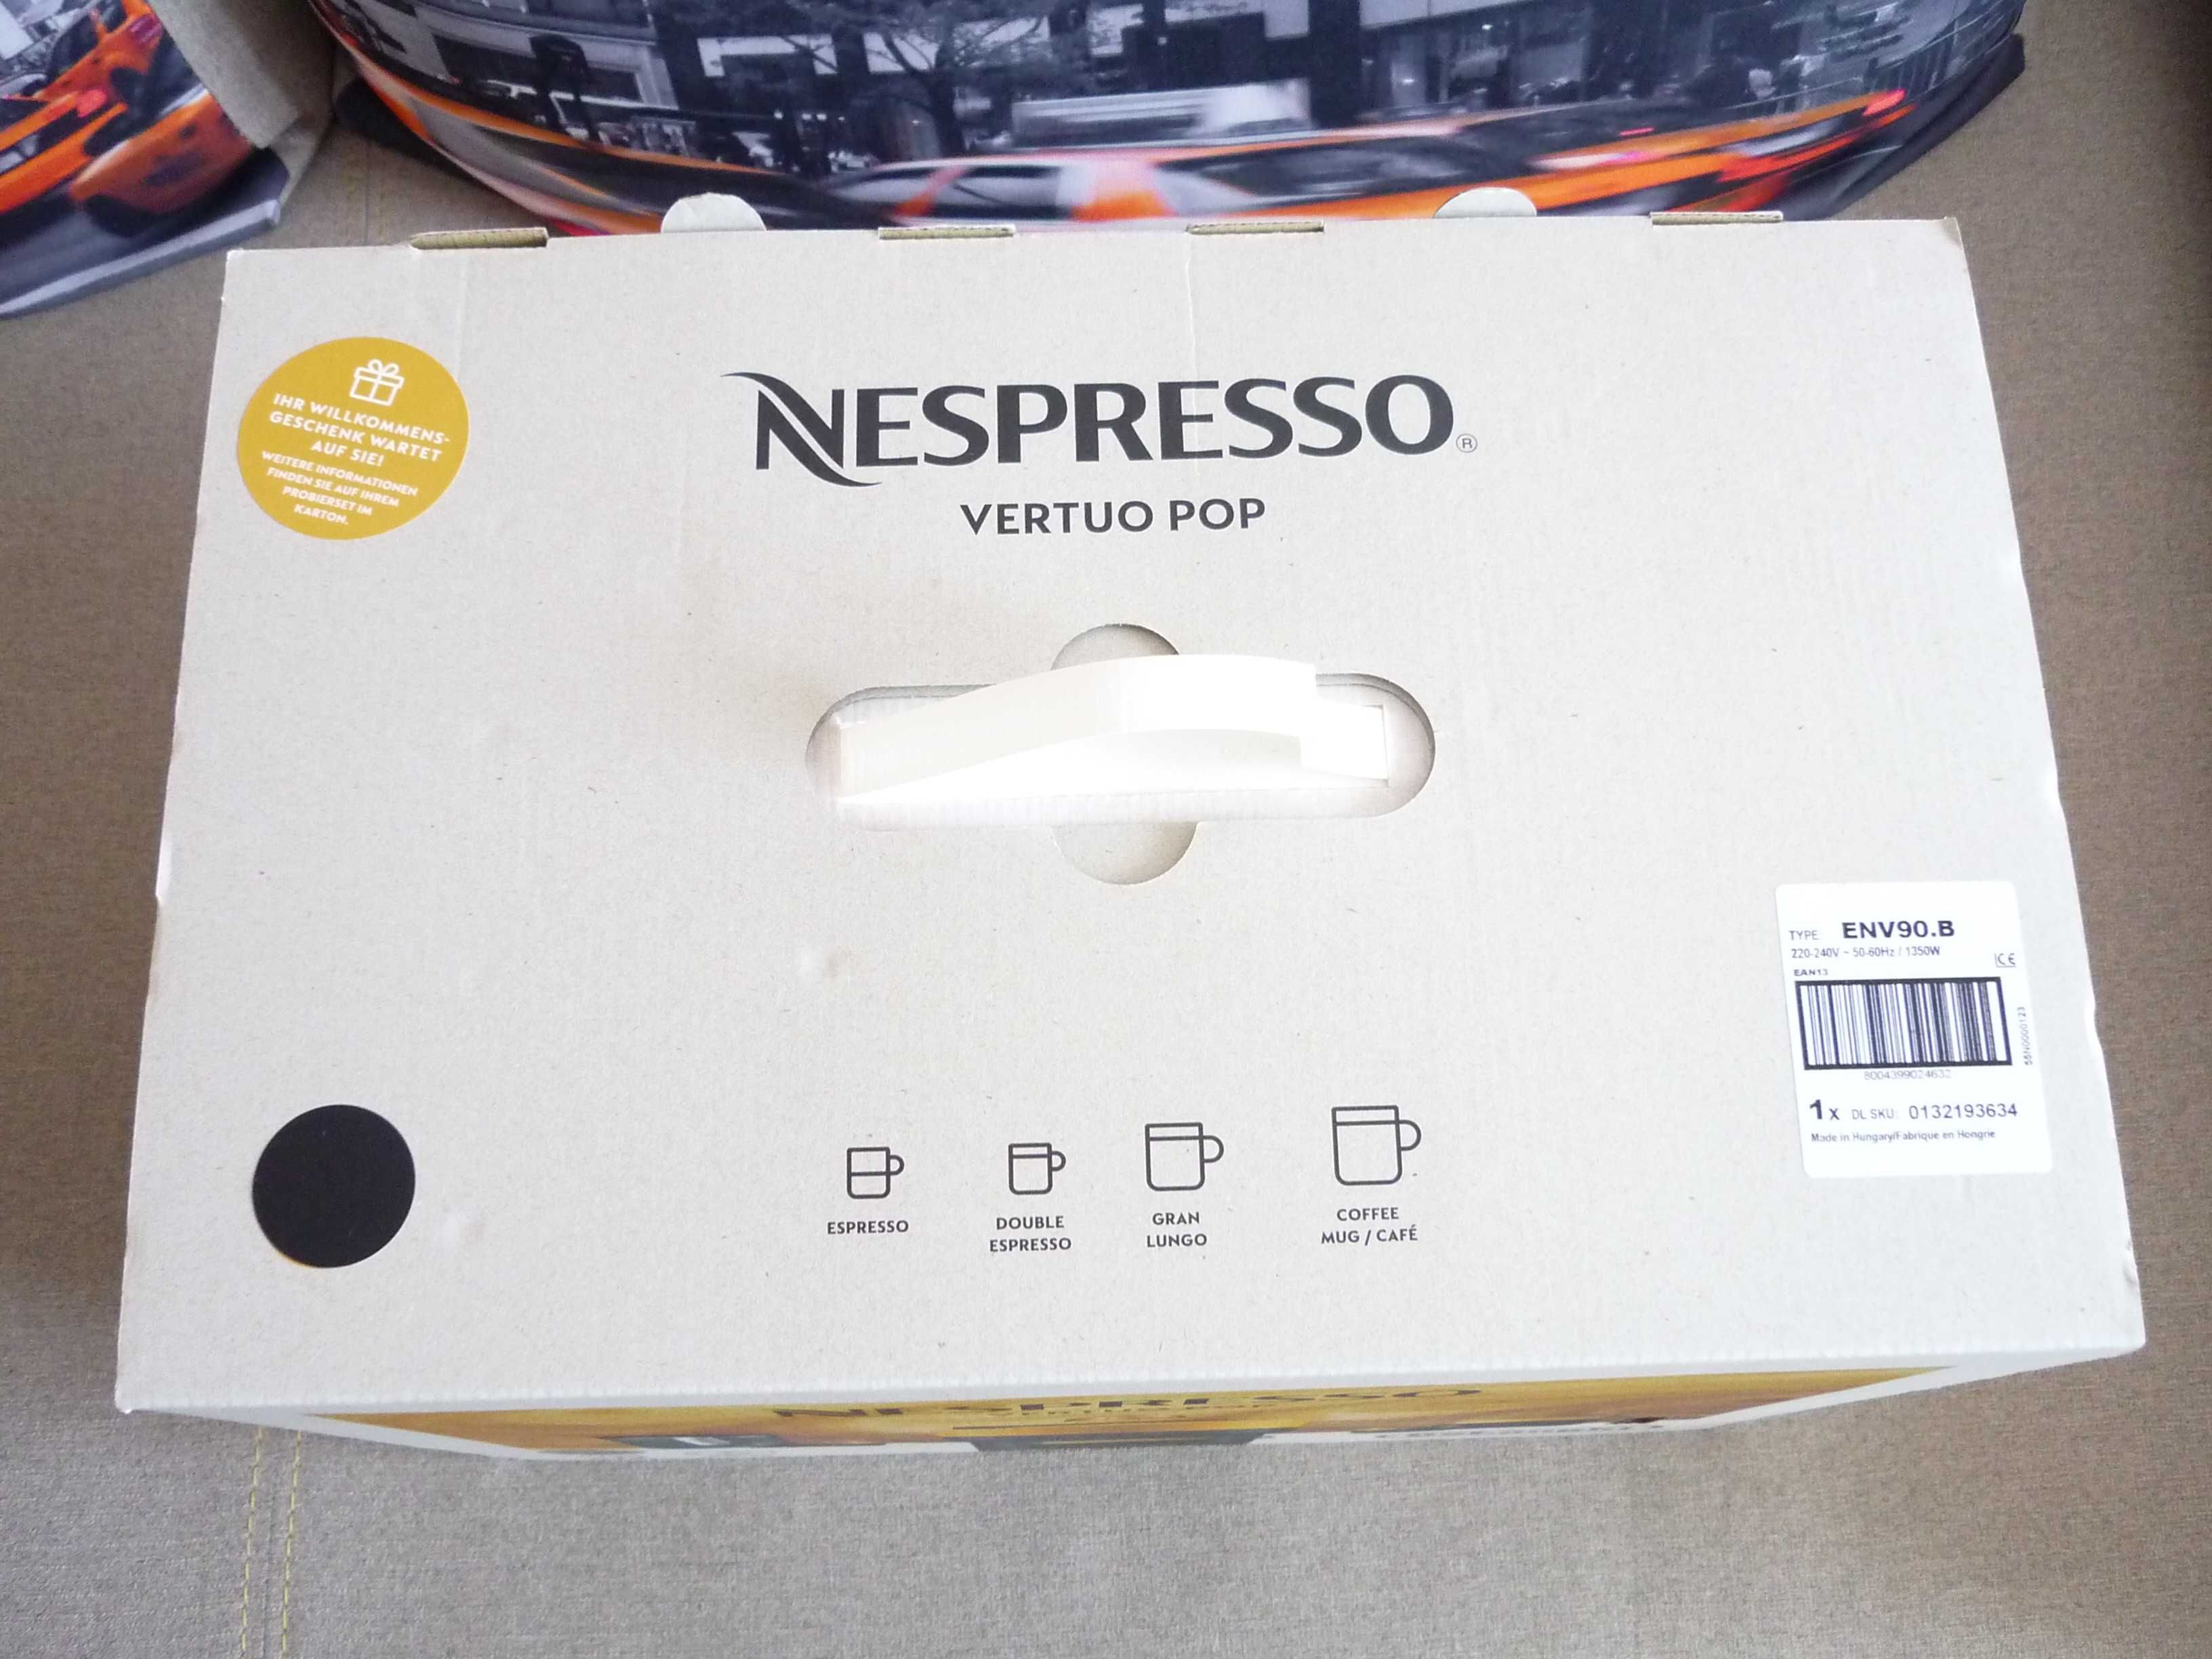 Ekspres do kawy DELonghi Nespresso Vertuo Pop